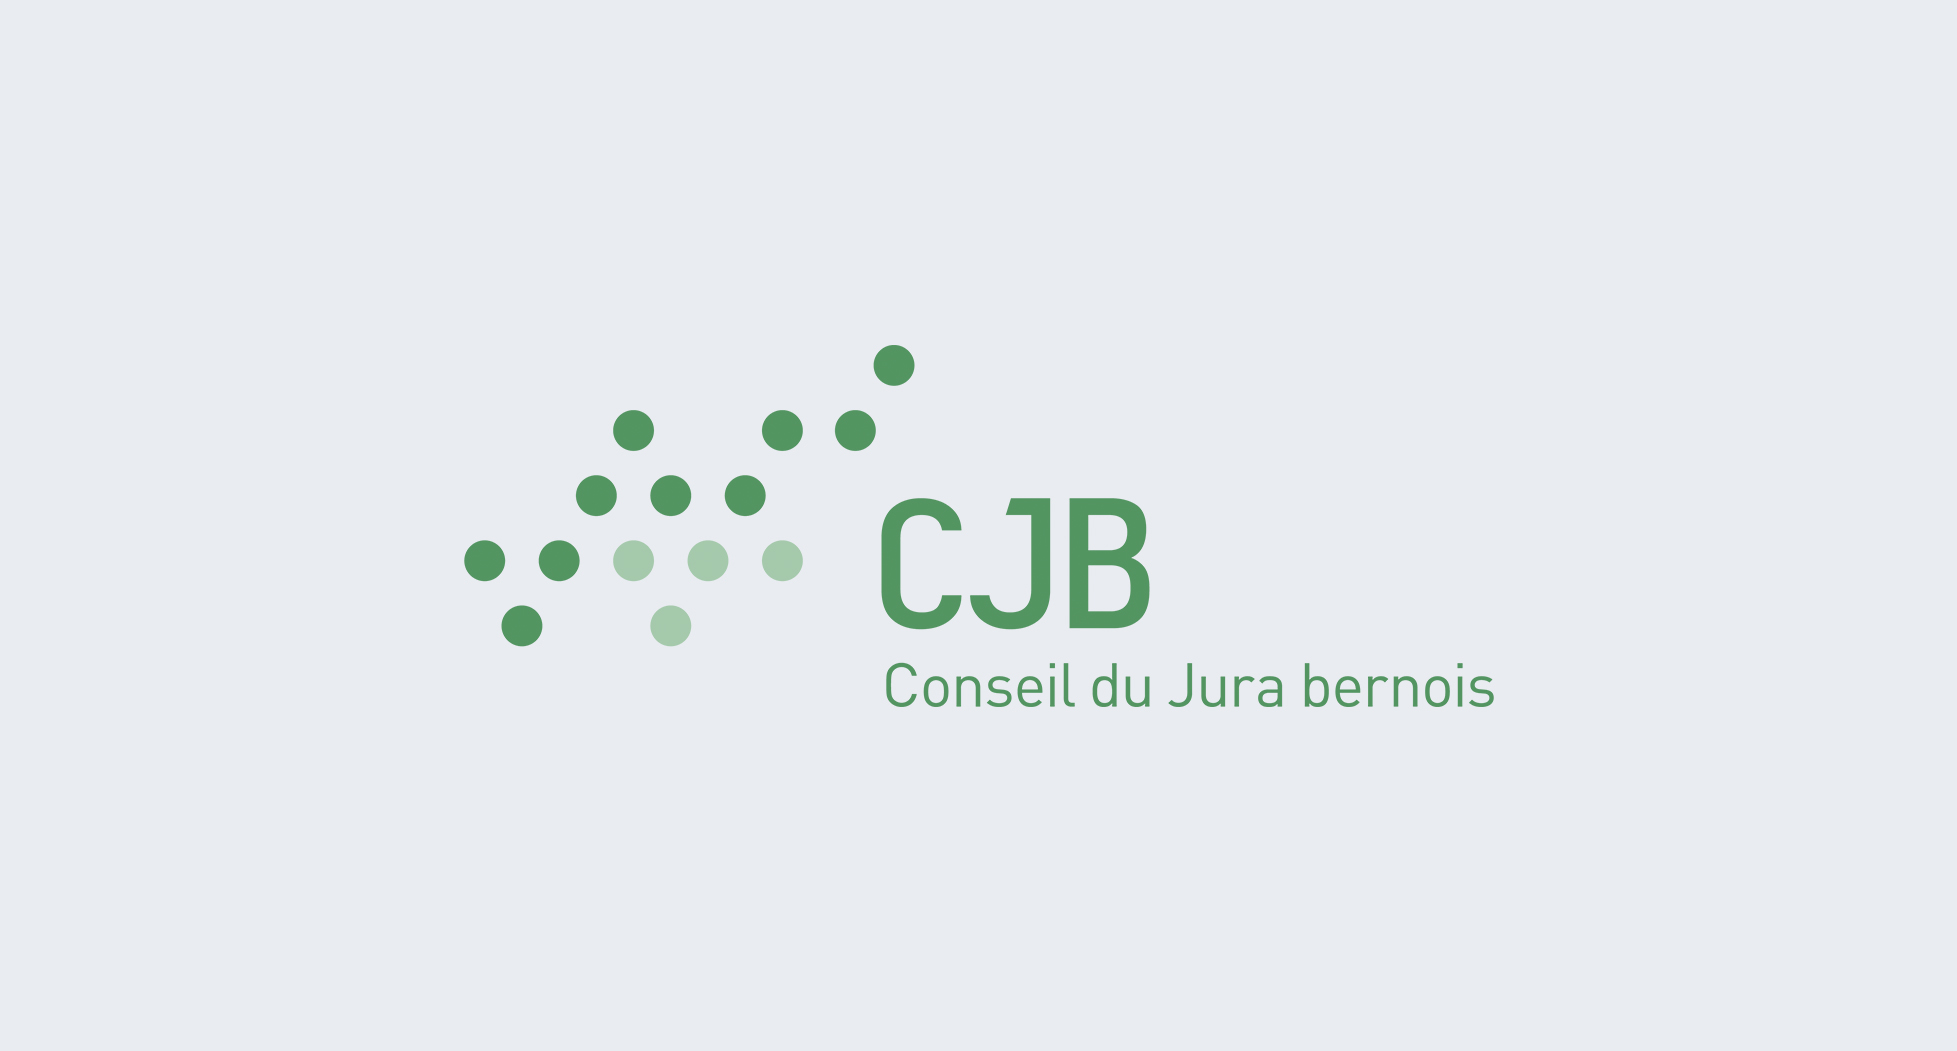 Refonte du logo du Conseil du Jura bernois (CJB).